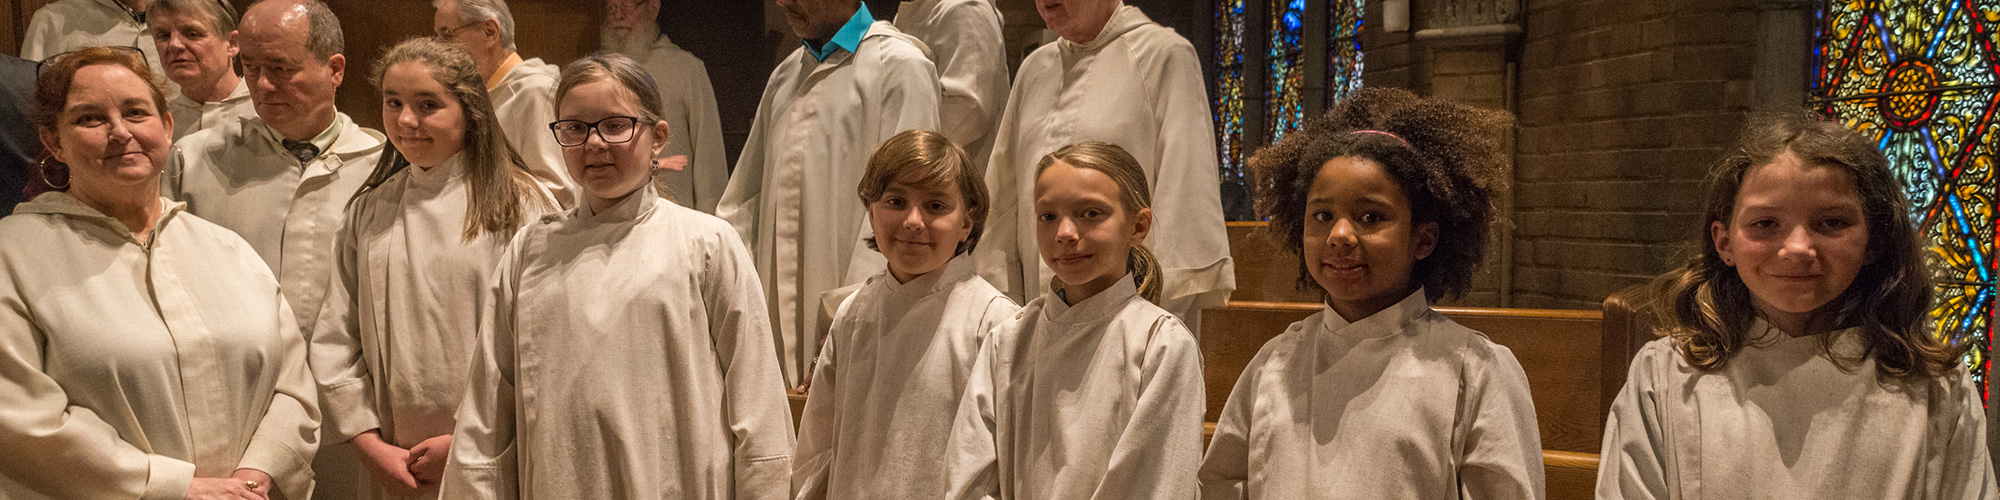 Mount Olive Church Kids Choir